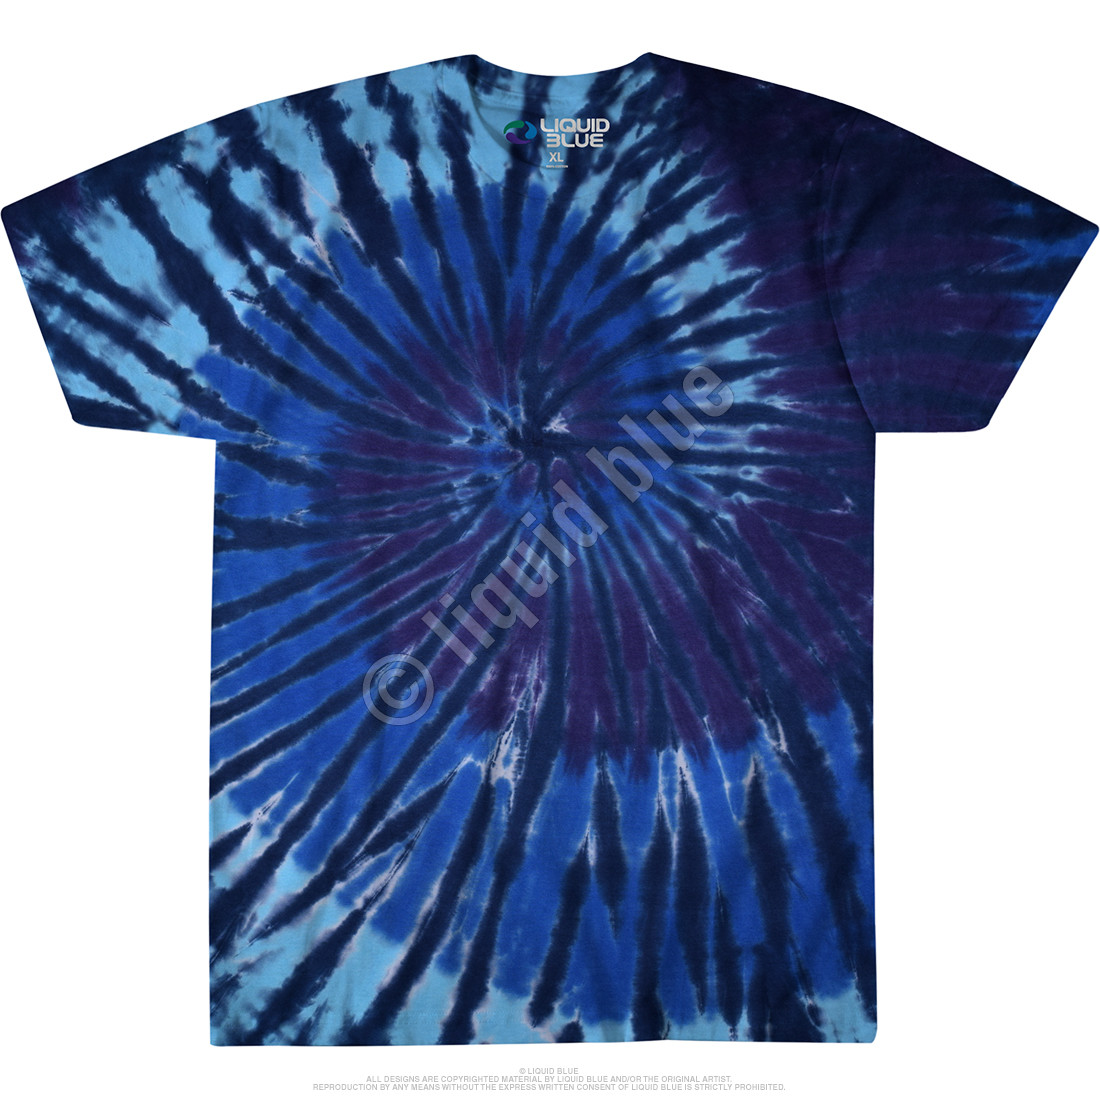 Blue Spiral Streak Unprinted Tie-Dye T-Shirt Tee Liquid Blue